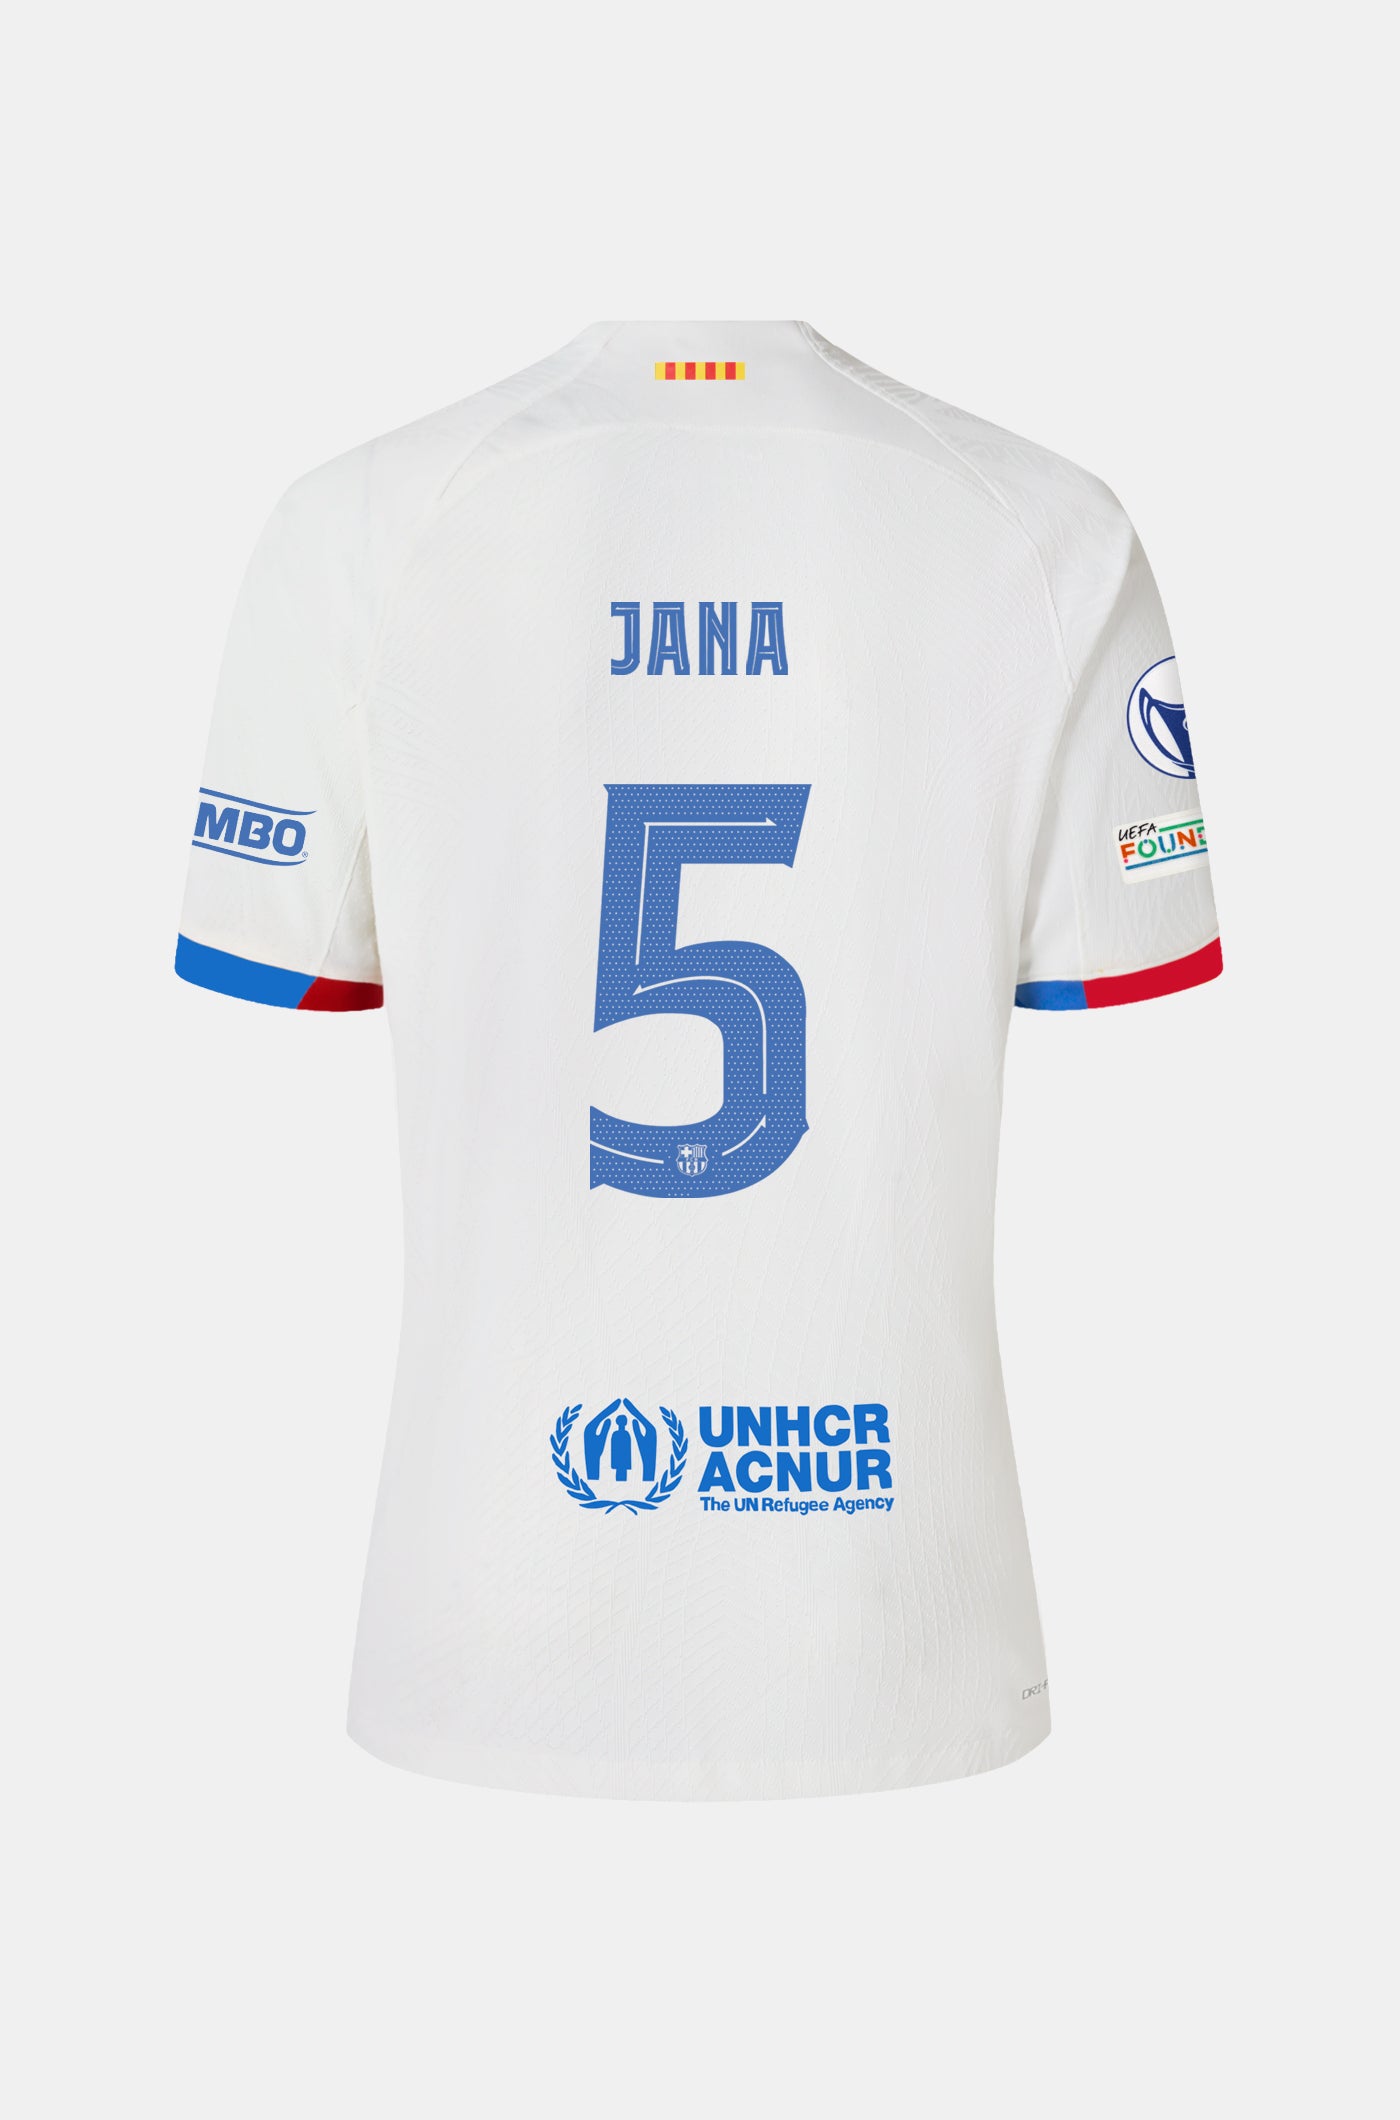 UWCL FC Barcelona away shirt 23/24 - Women  - JANA